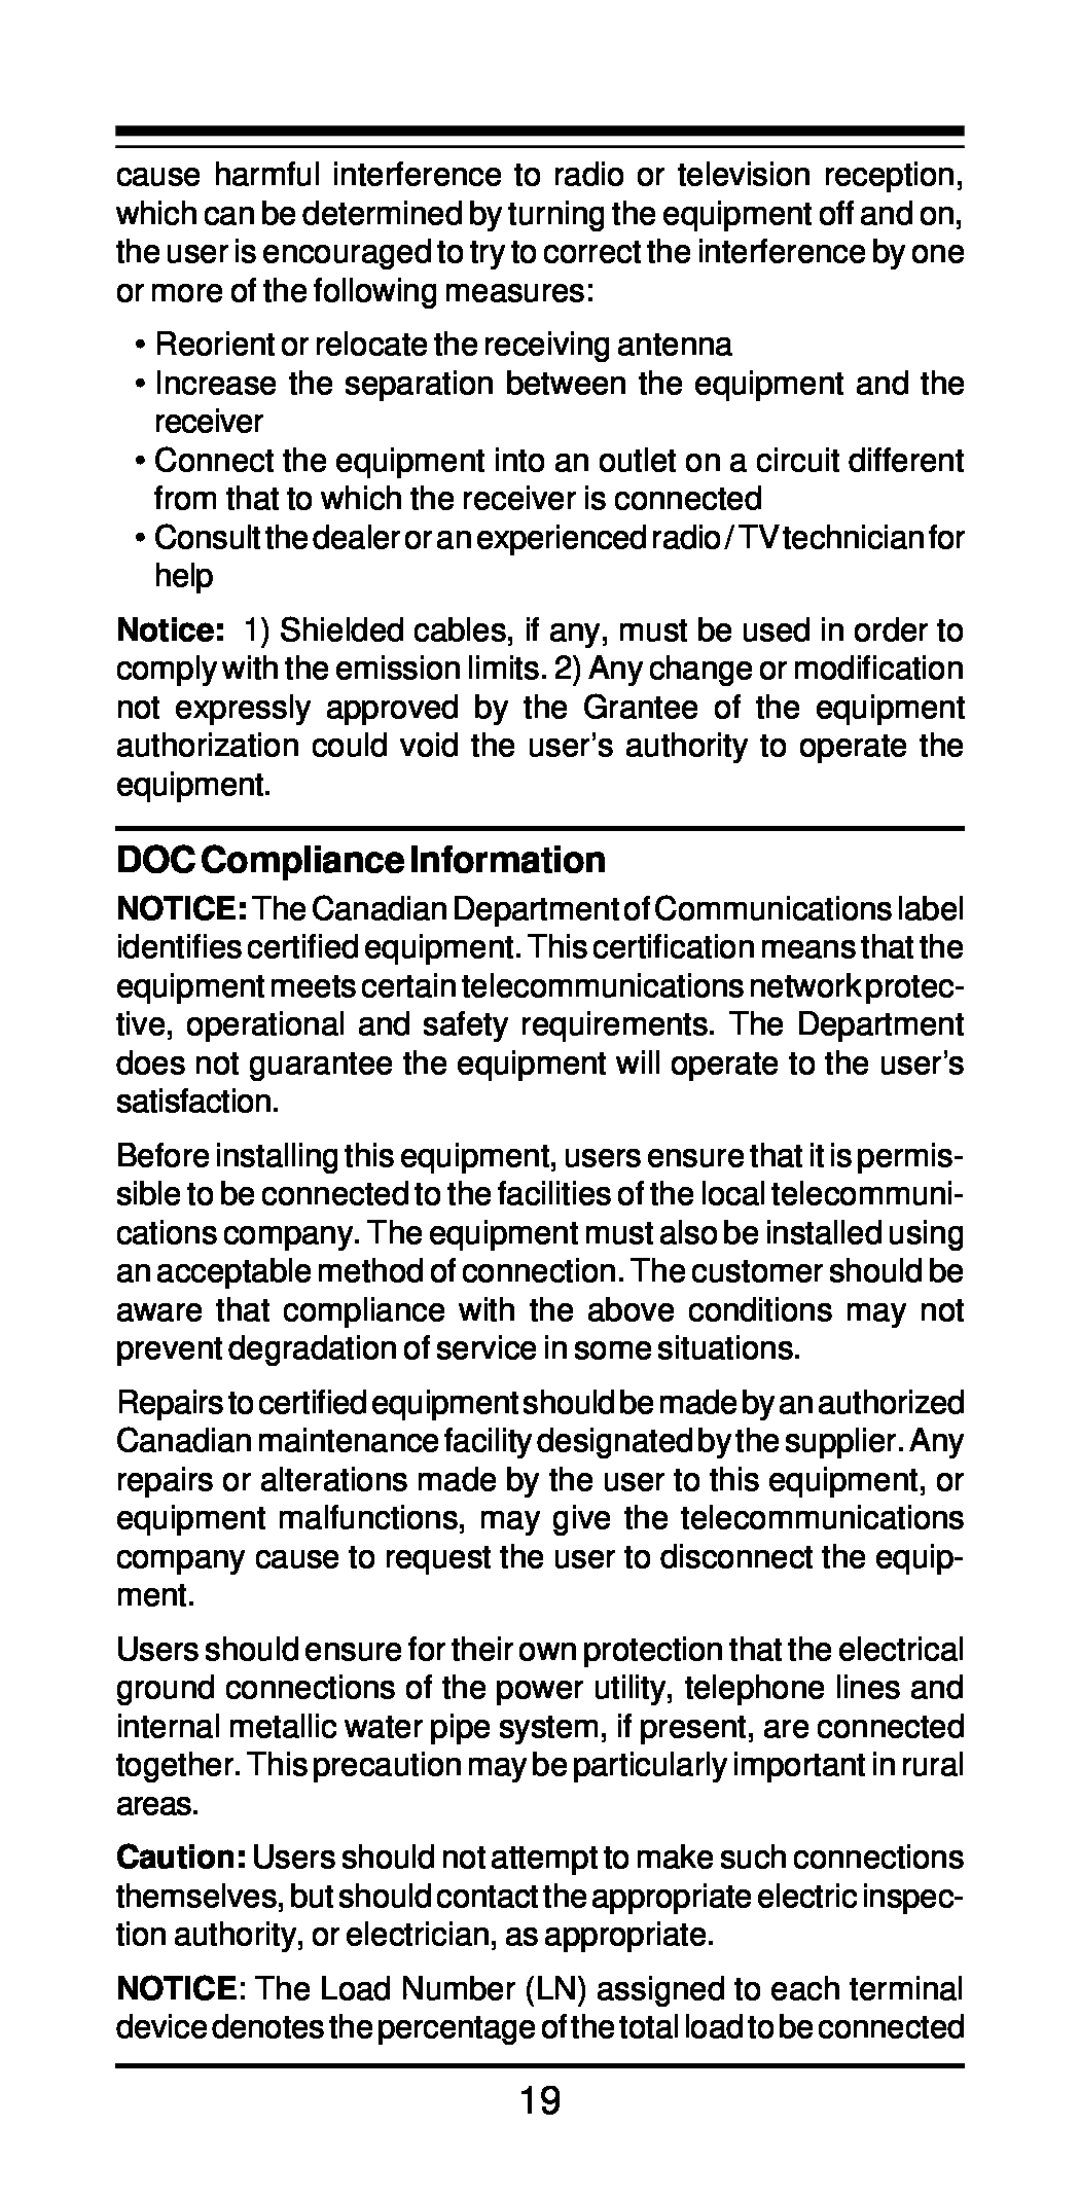 MaxTech xpvs336i user manual DOC Compliance Information 